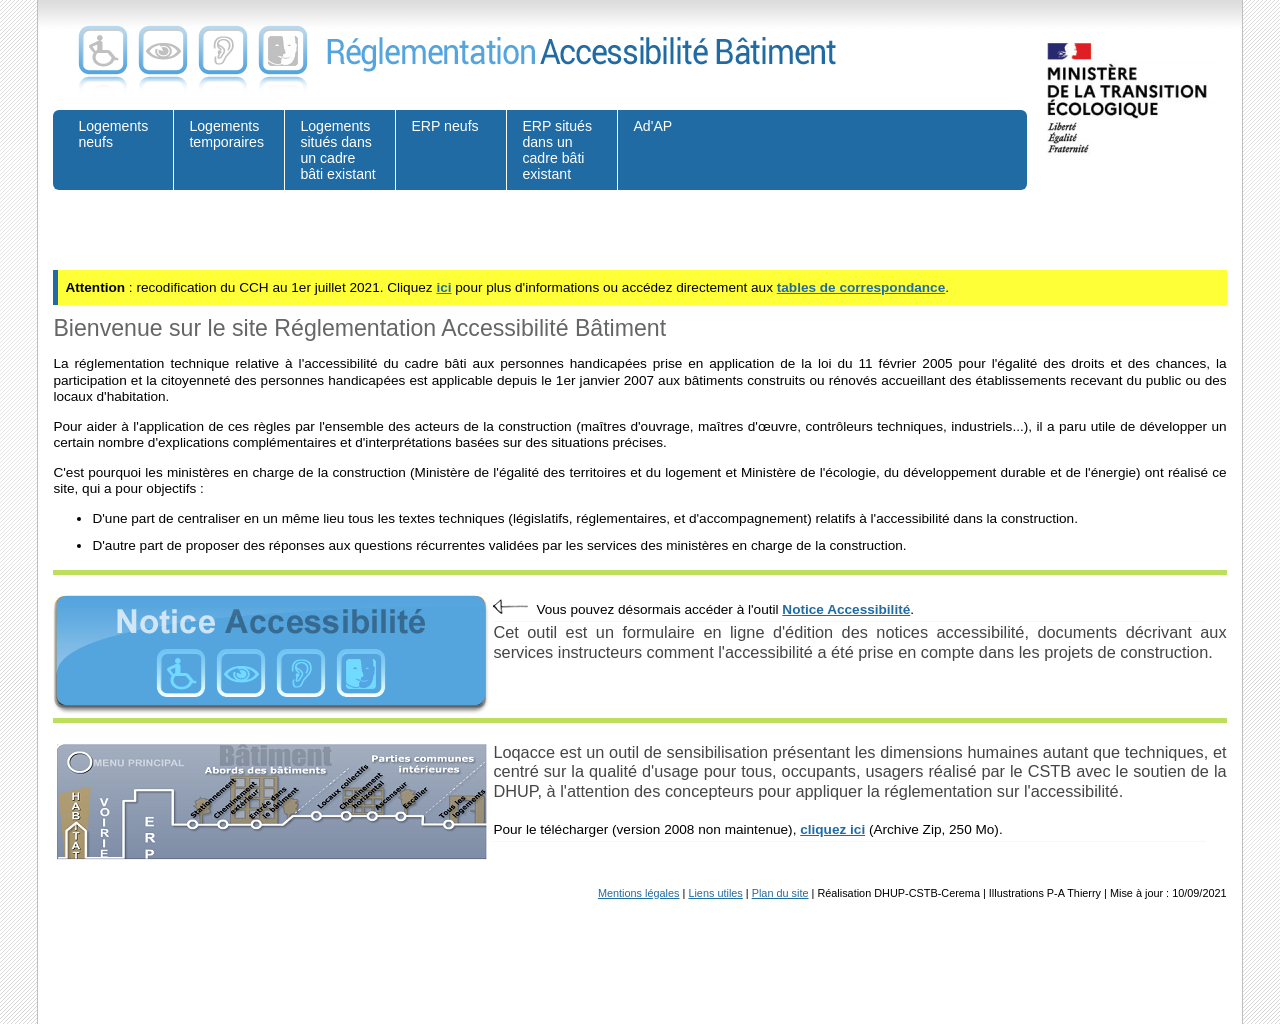 www.accessibilite-batiment.fr